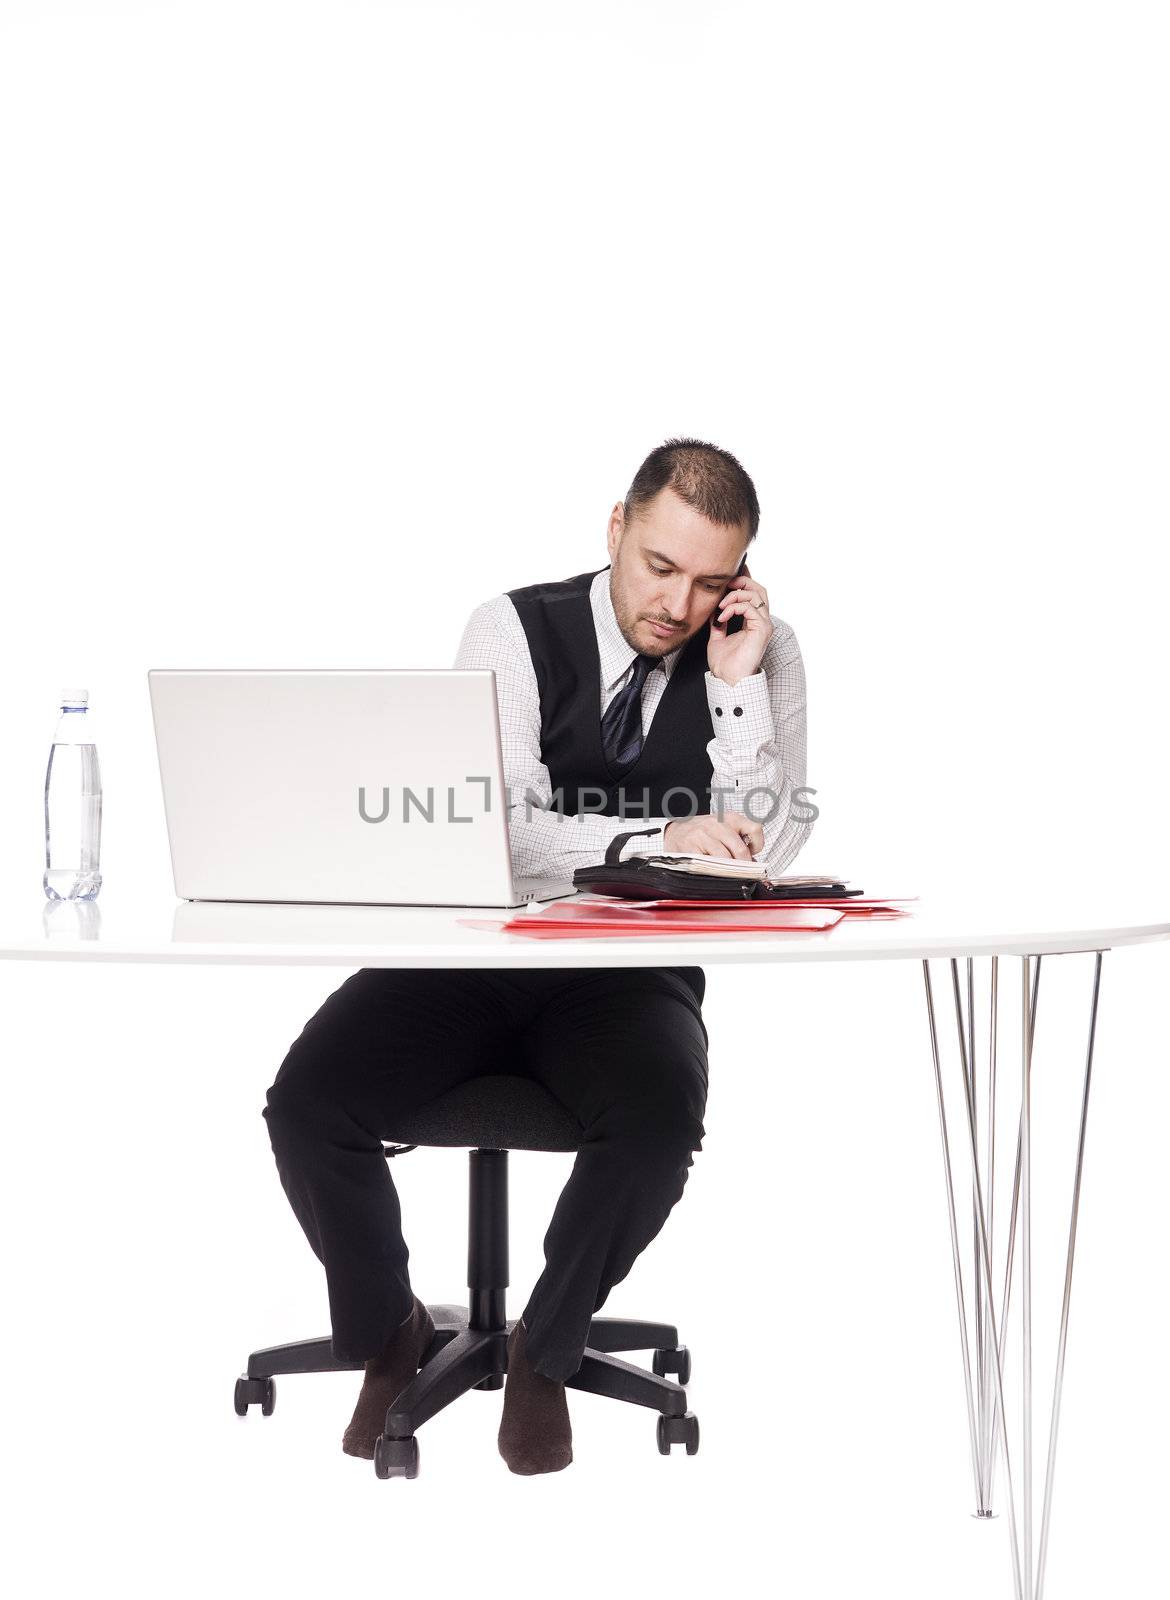 Man behind a desk organizing his day by gemenacom